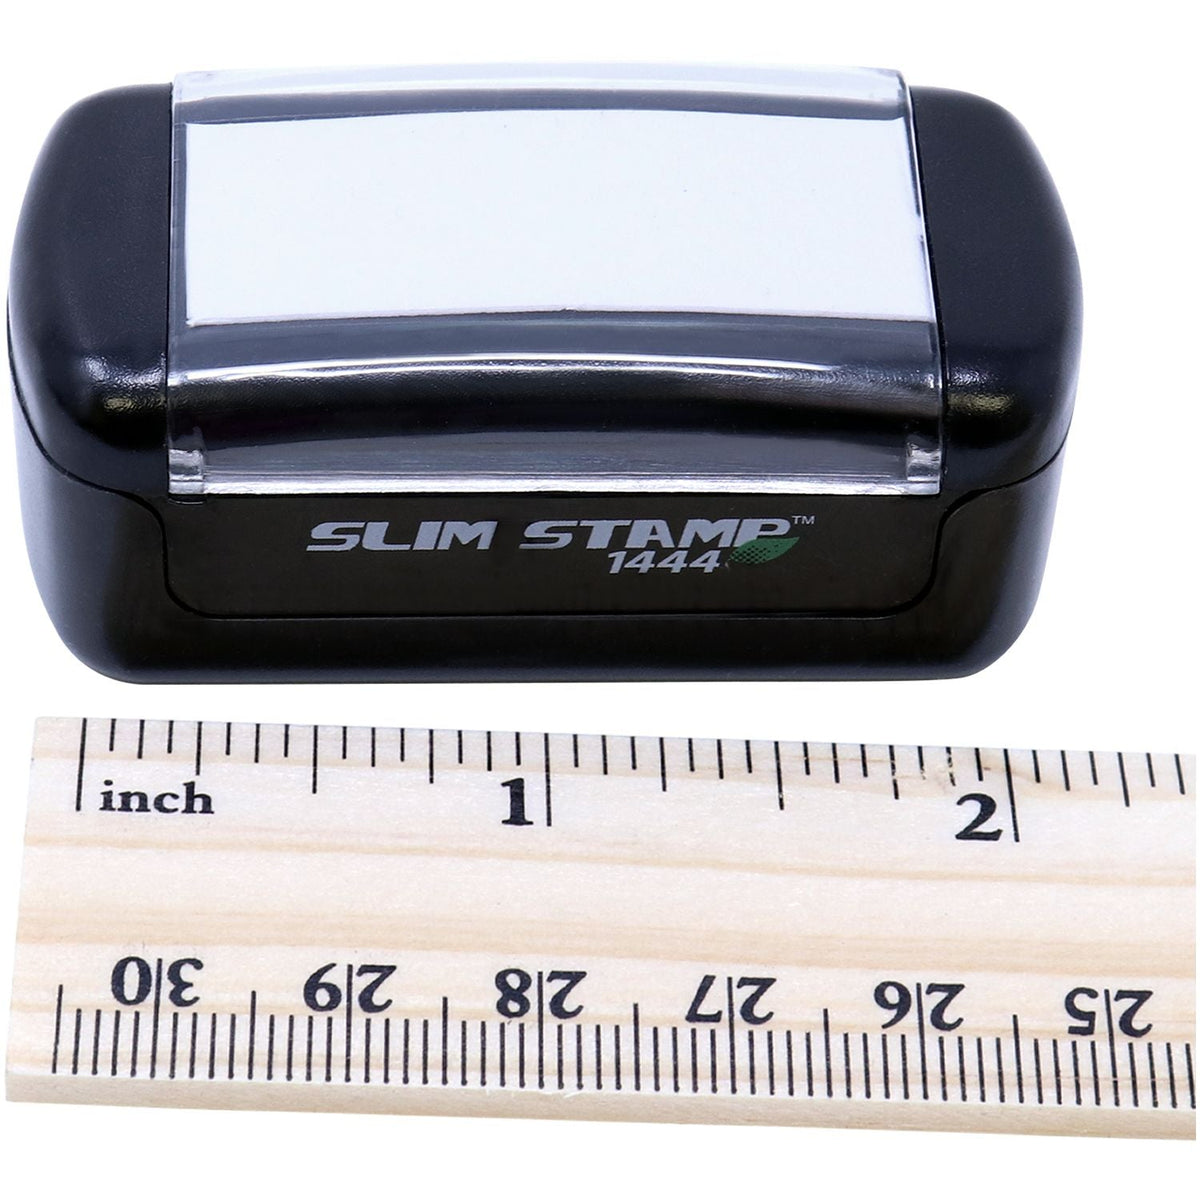 Measurement Slim Pre-Inked Essential Job Stamp with Ruler